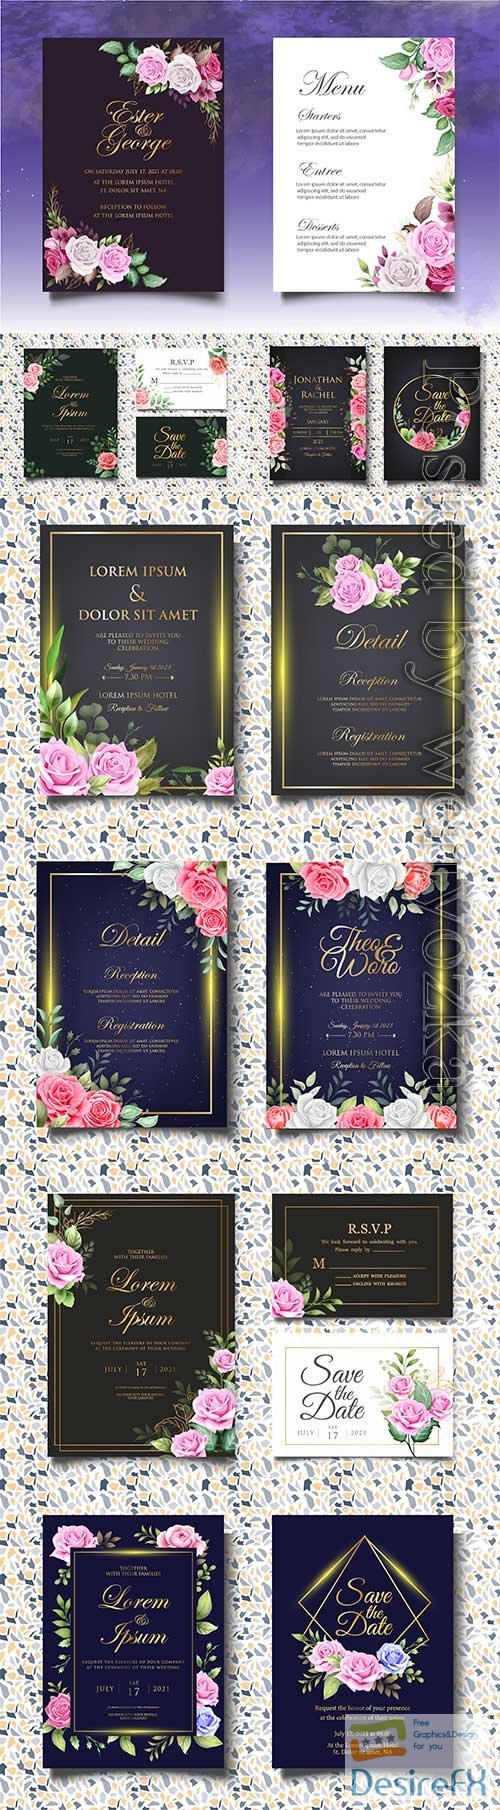 Beautiful invitation wedding card with decoration